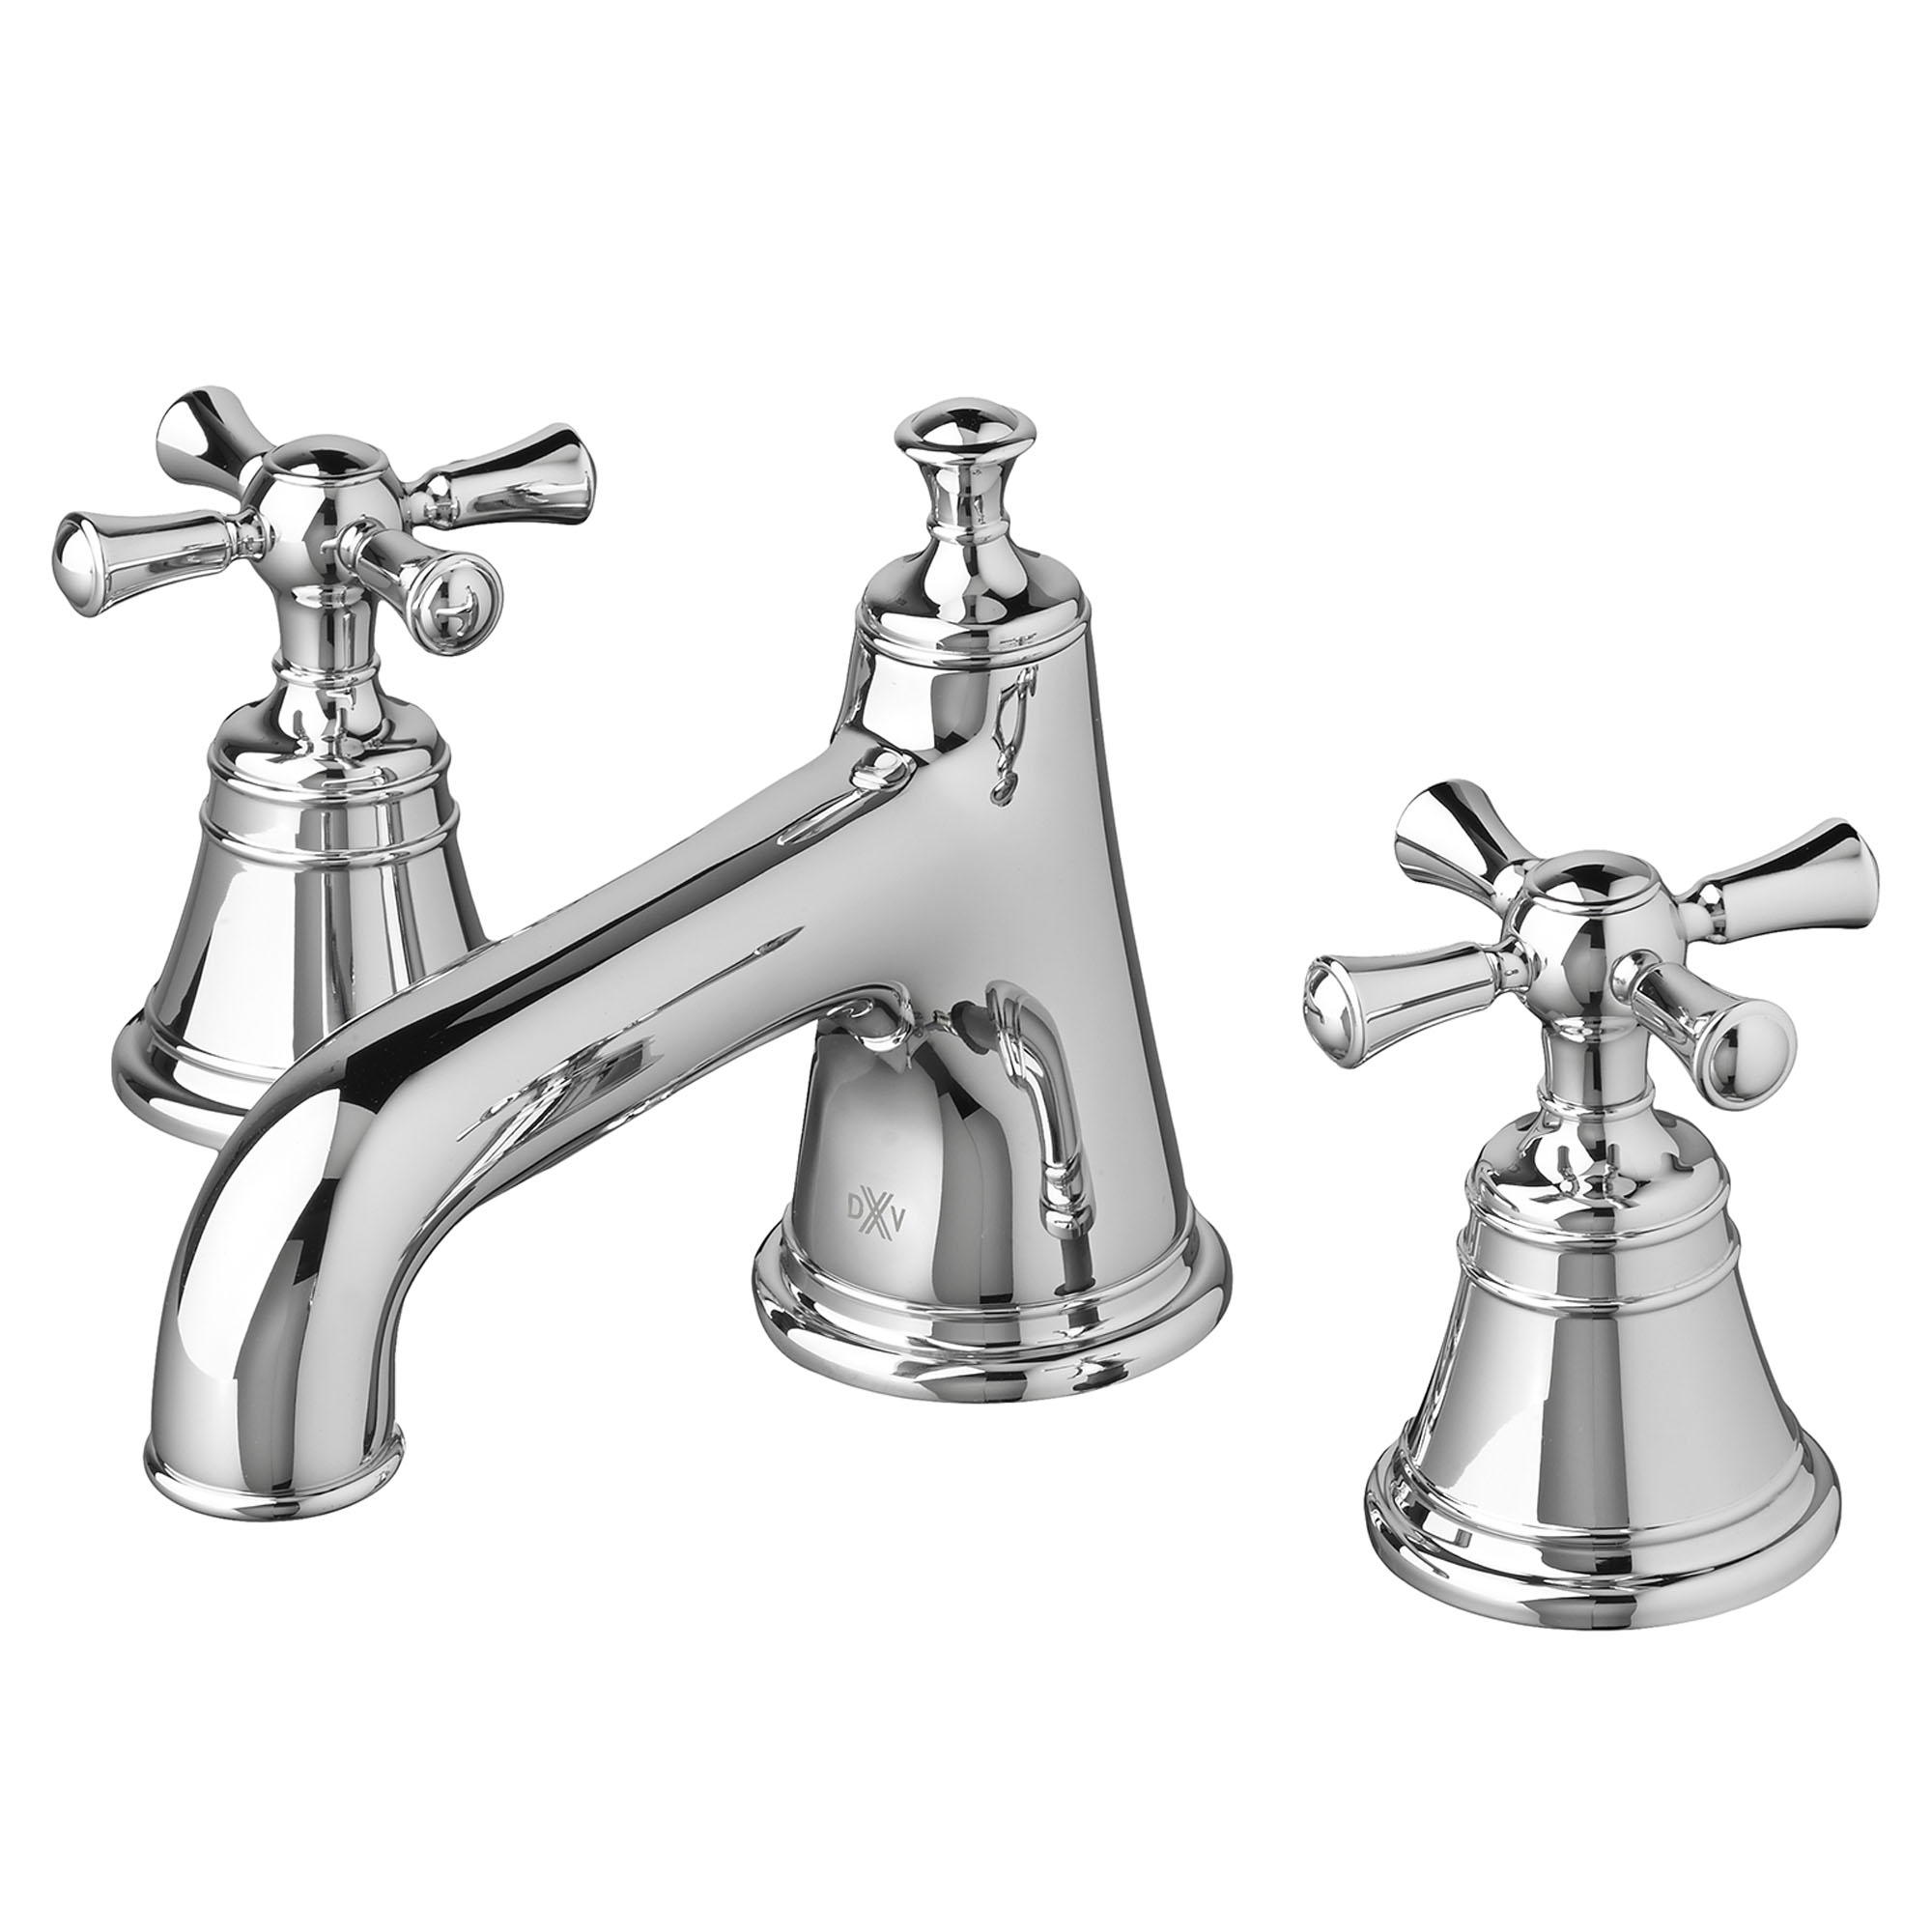 Randall 2-Handle Widespread Bathroom Faucet with Cross Handles